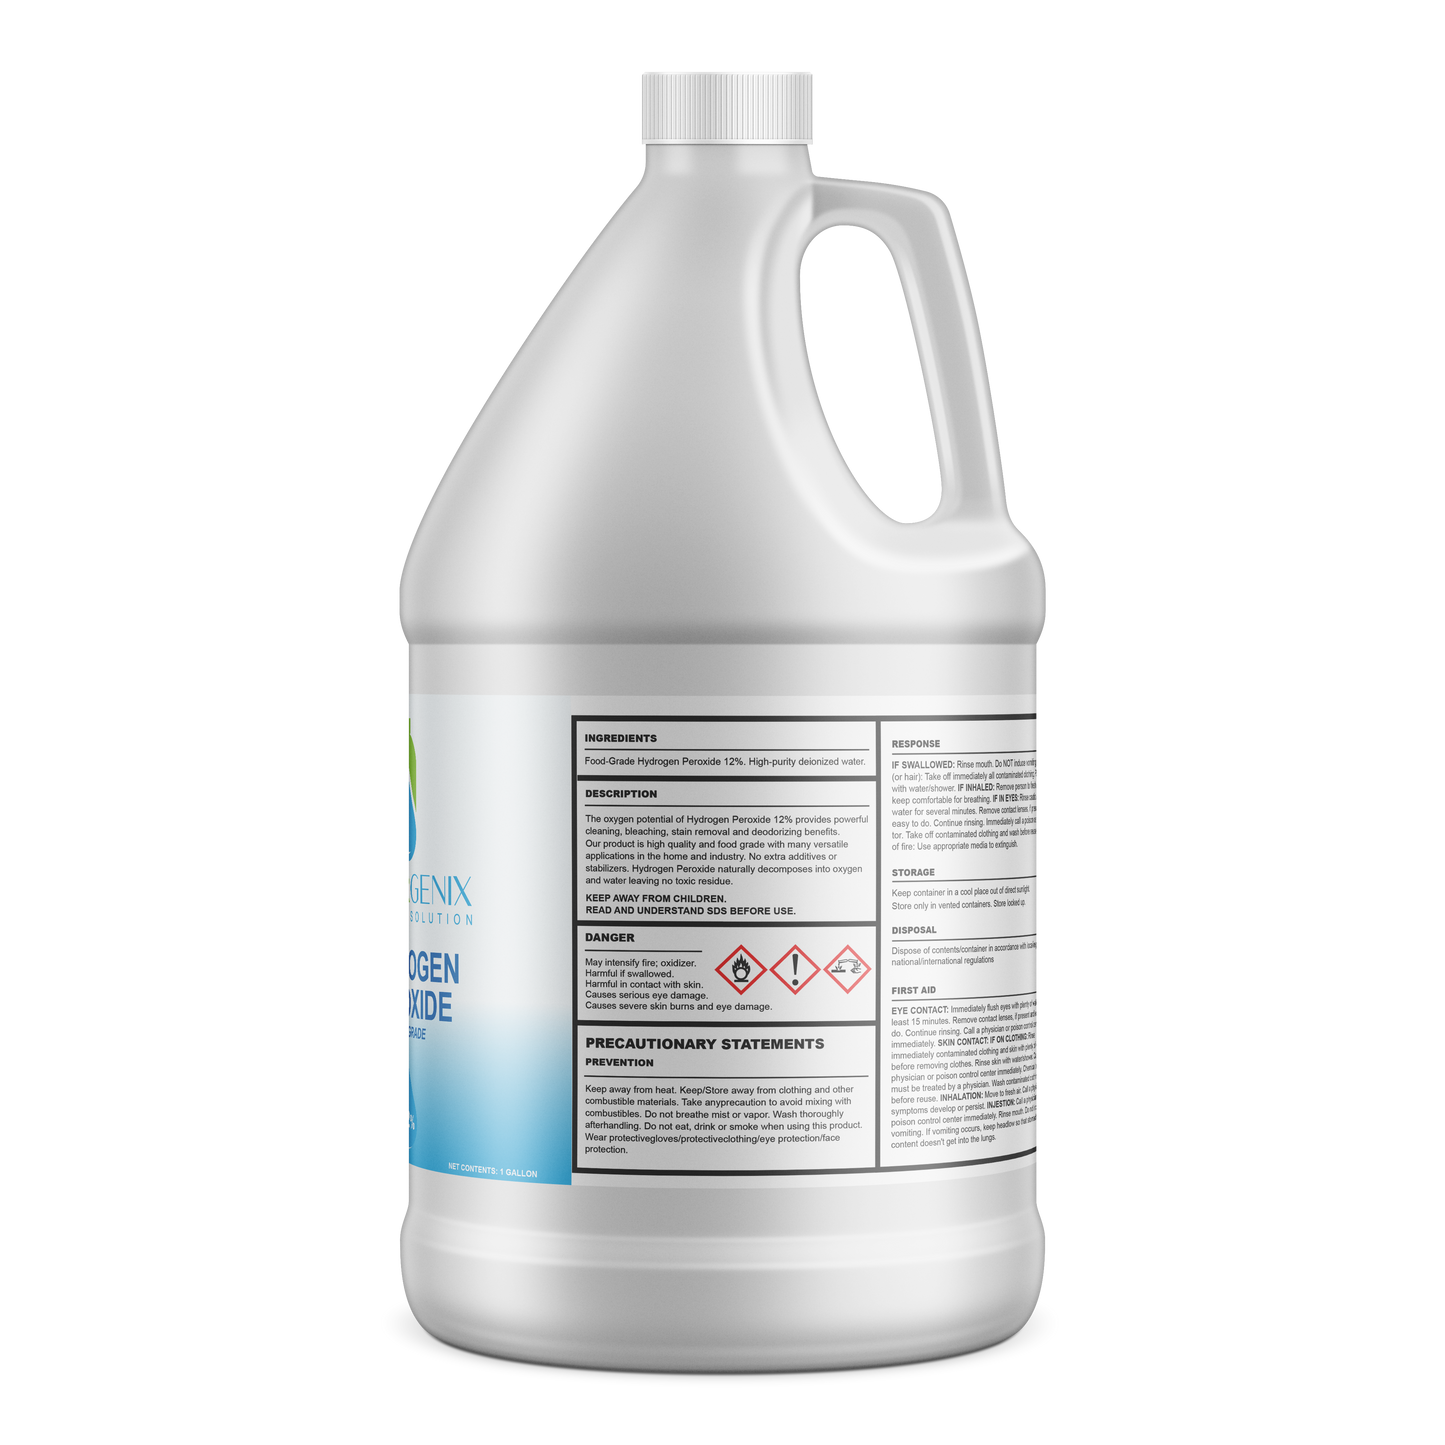 Hydrogen Peroxide 12%, Food Grade, 1-Gallon (128-floz), Multi-Use, Extra-Strength